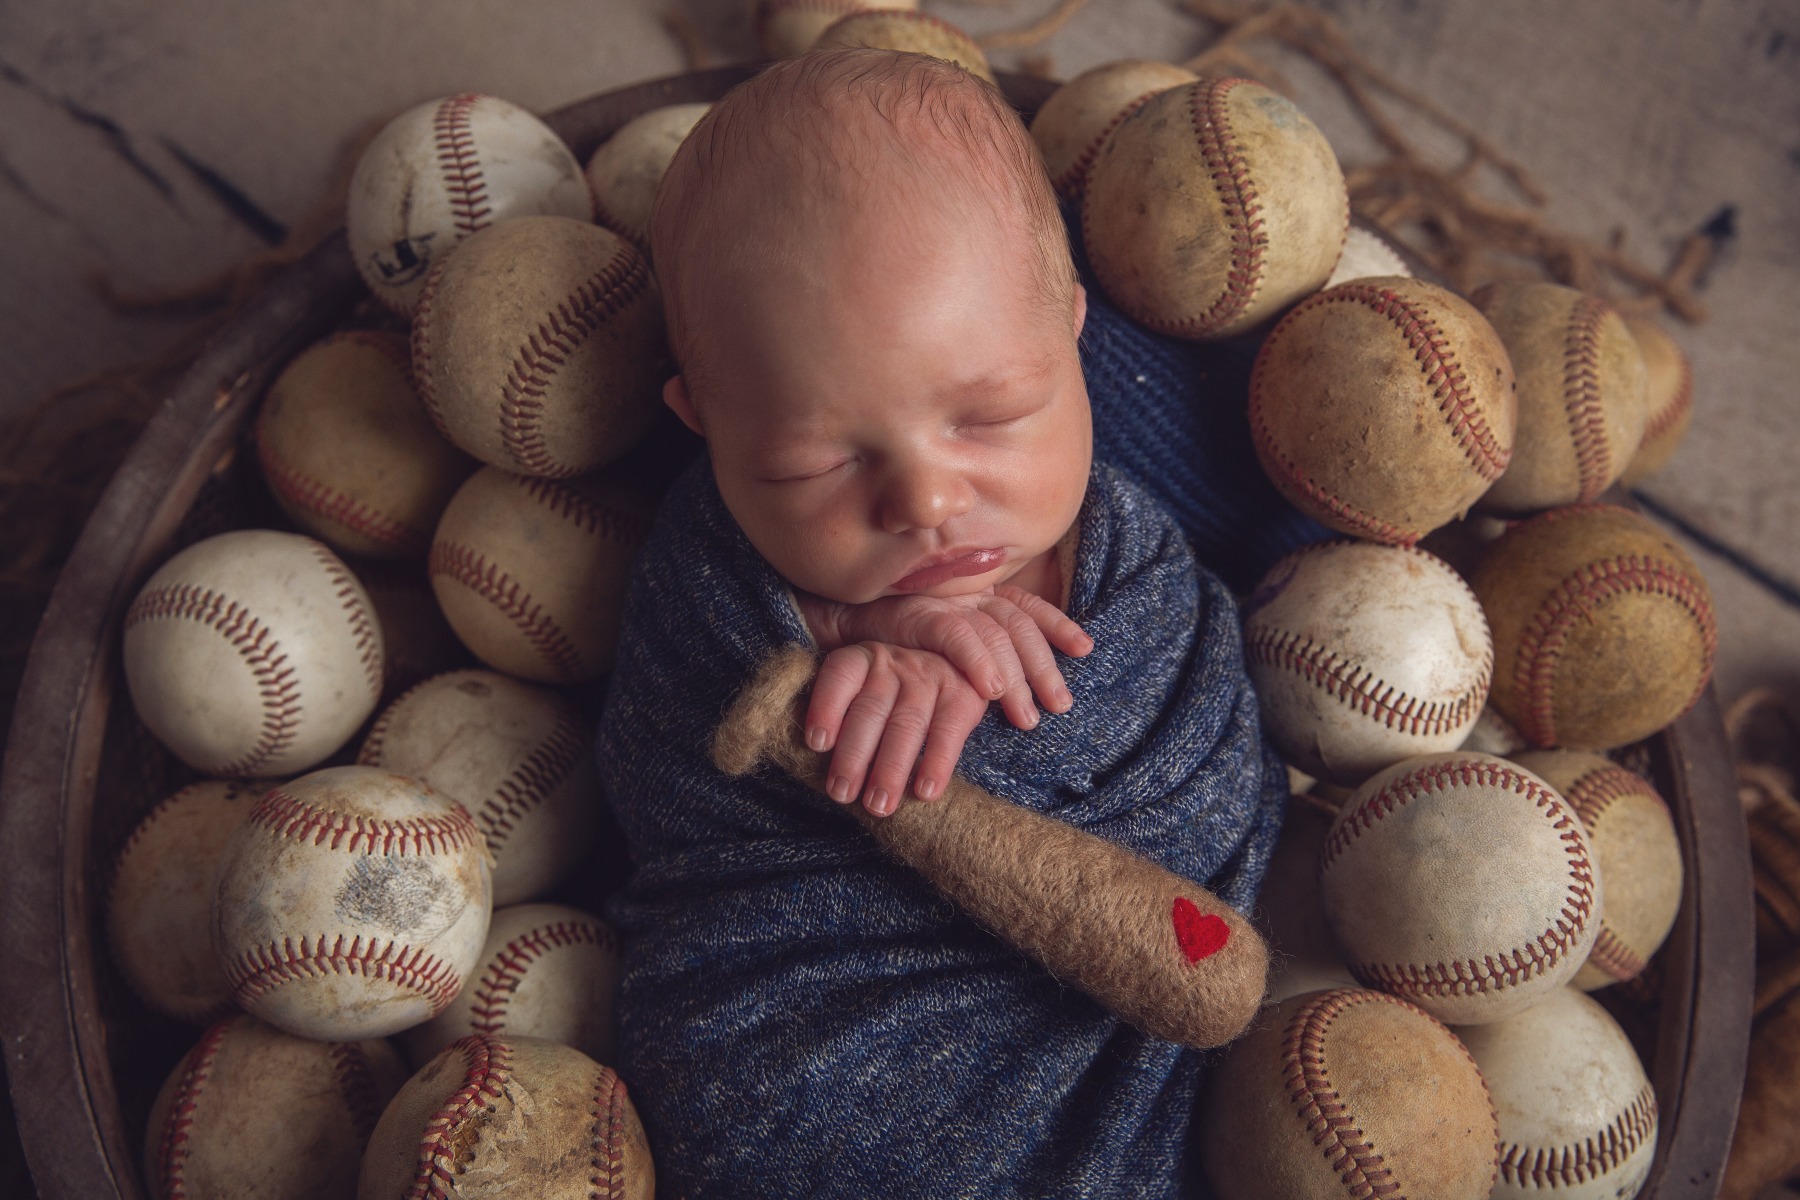 newborn baby swaddled sleeping amongst vintage baseballs